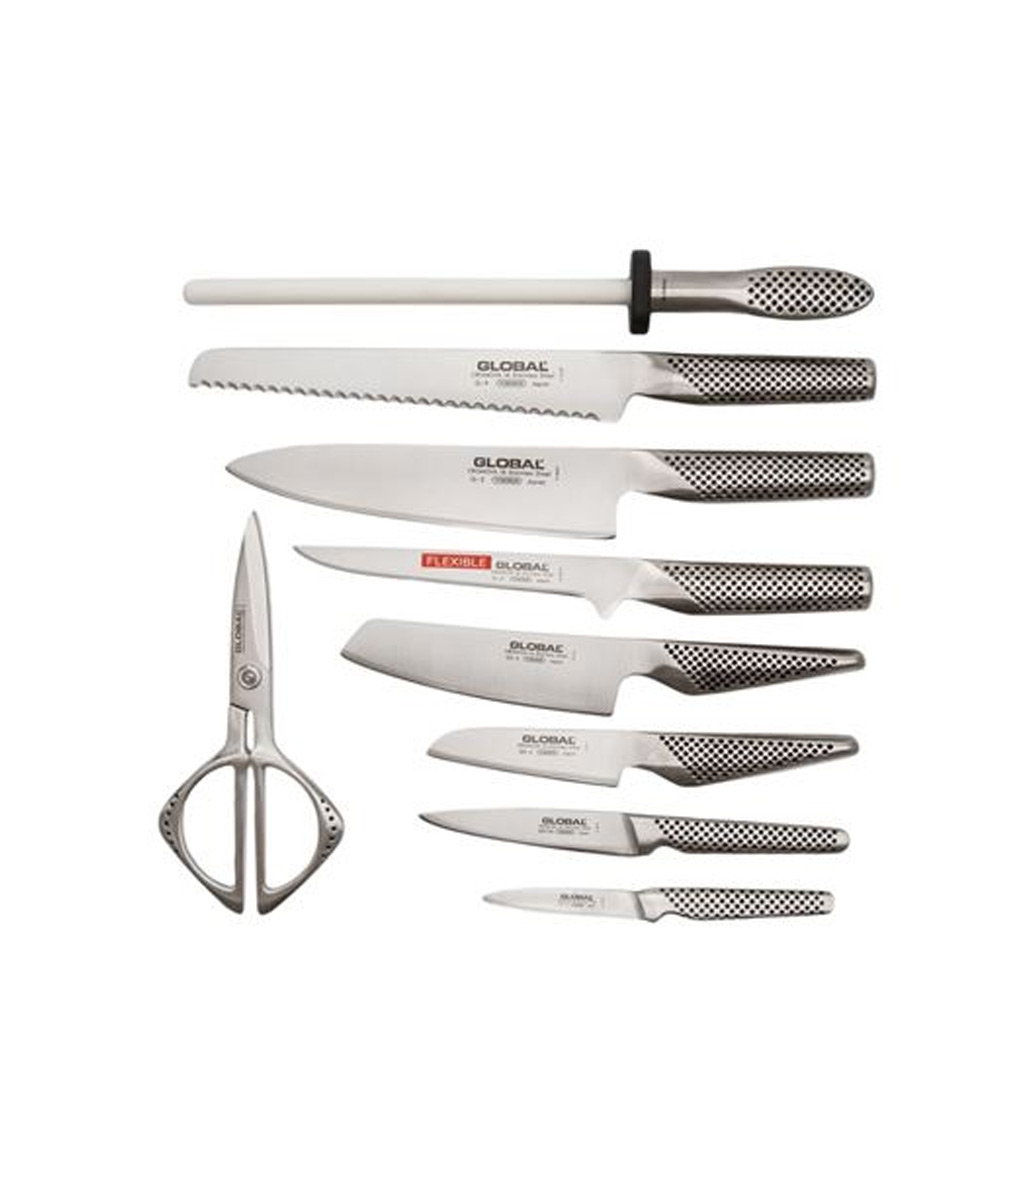 global takashi 10 piece knife block review